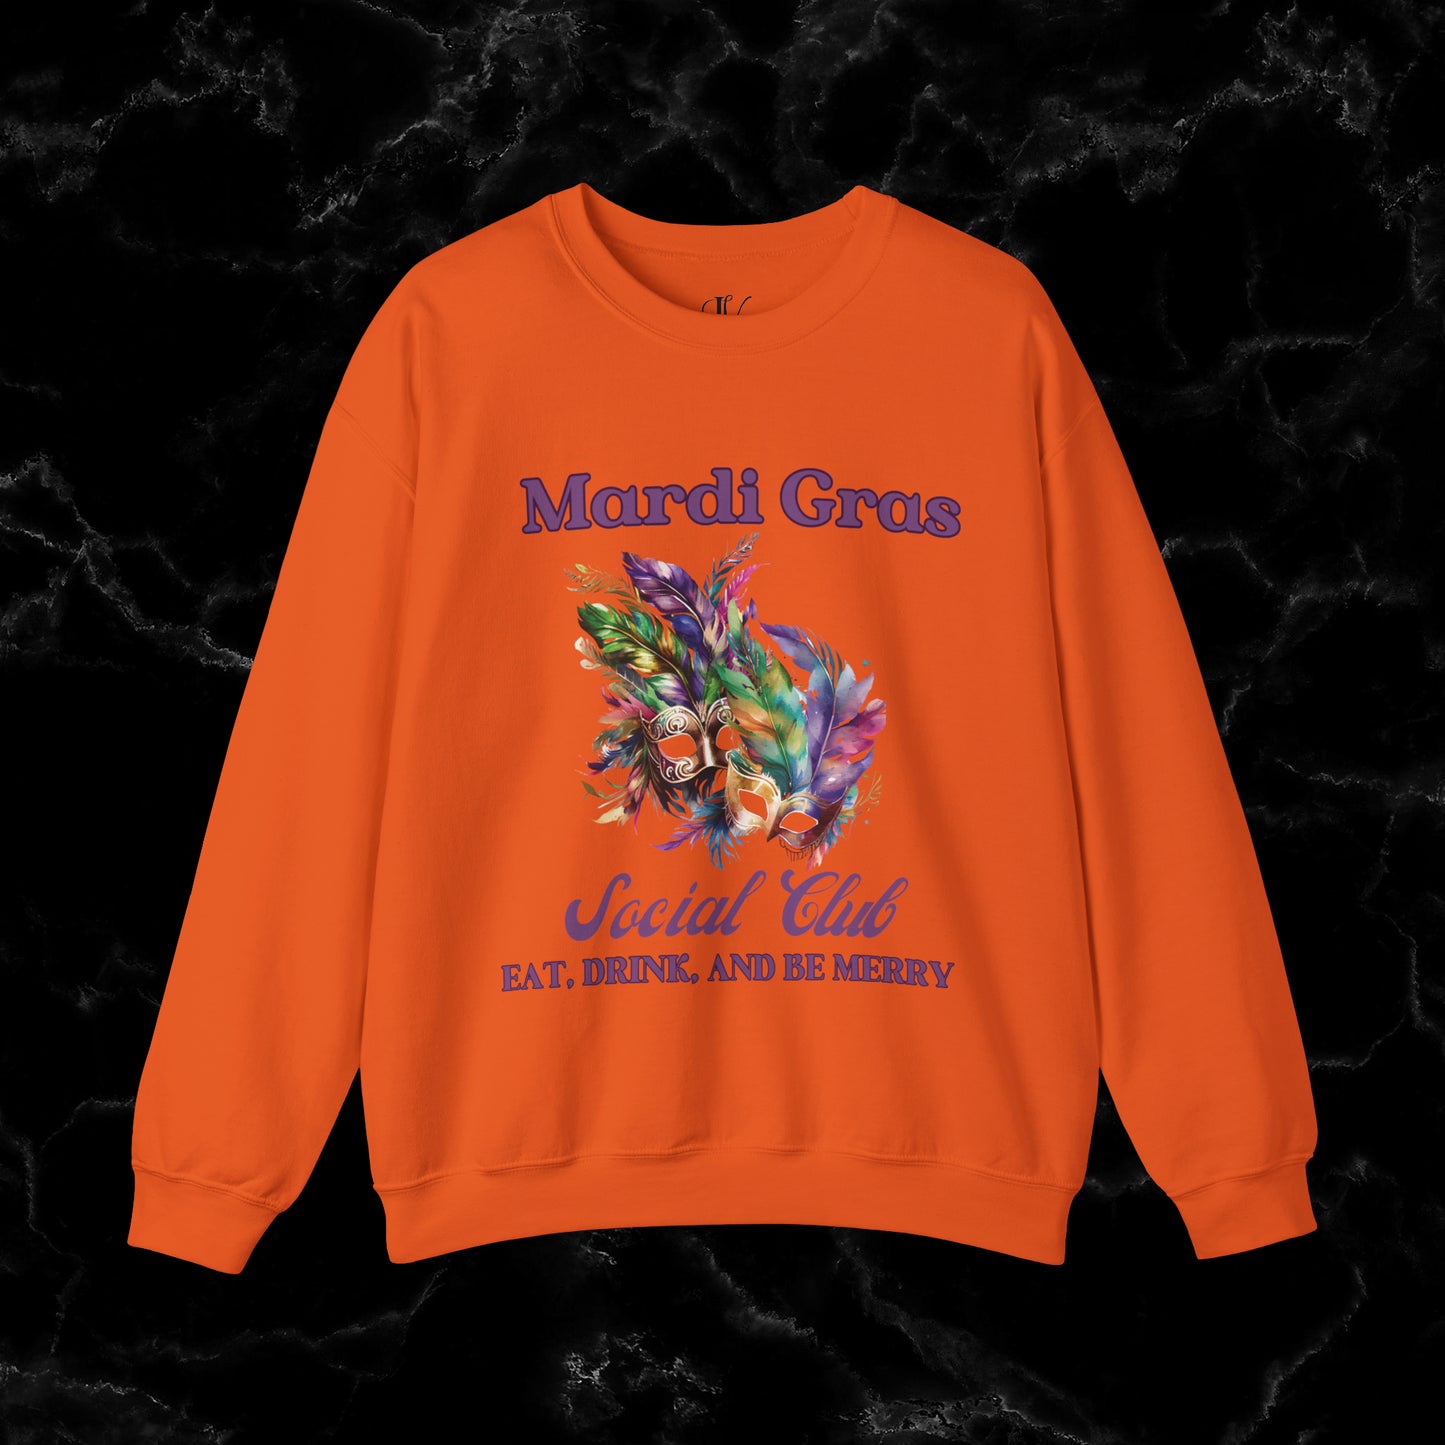 Mardi Gras Sweatshirt Women - NOLA Luxury Bachelorette Sweater, Unique Fat Tuesday Shirt, Louisiana Girls Trip Sweater, Mardi Gras Social Club Chic Sweatshirt S Orange 